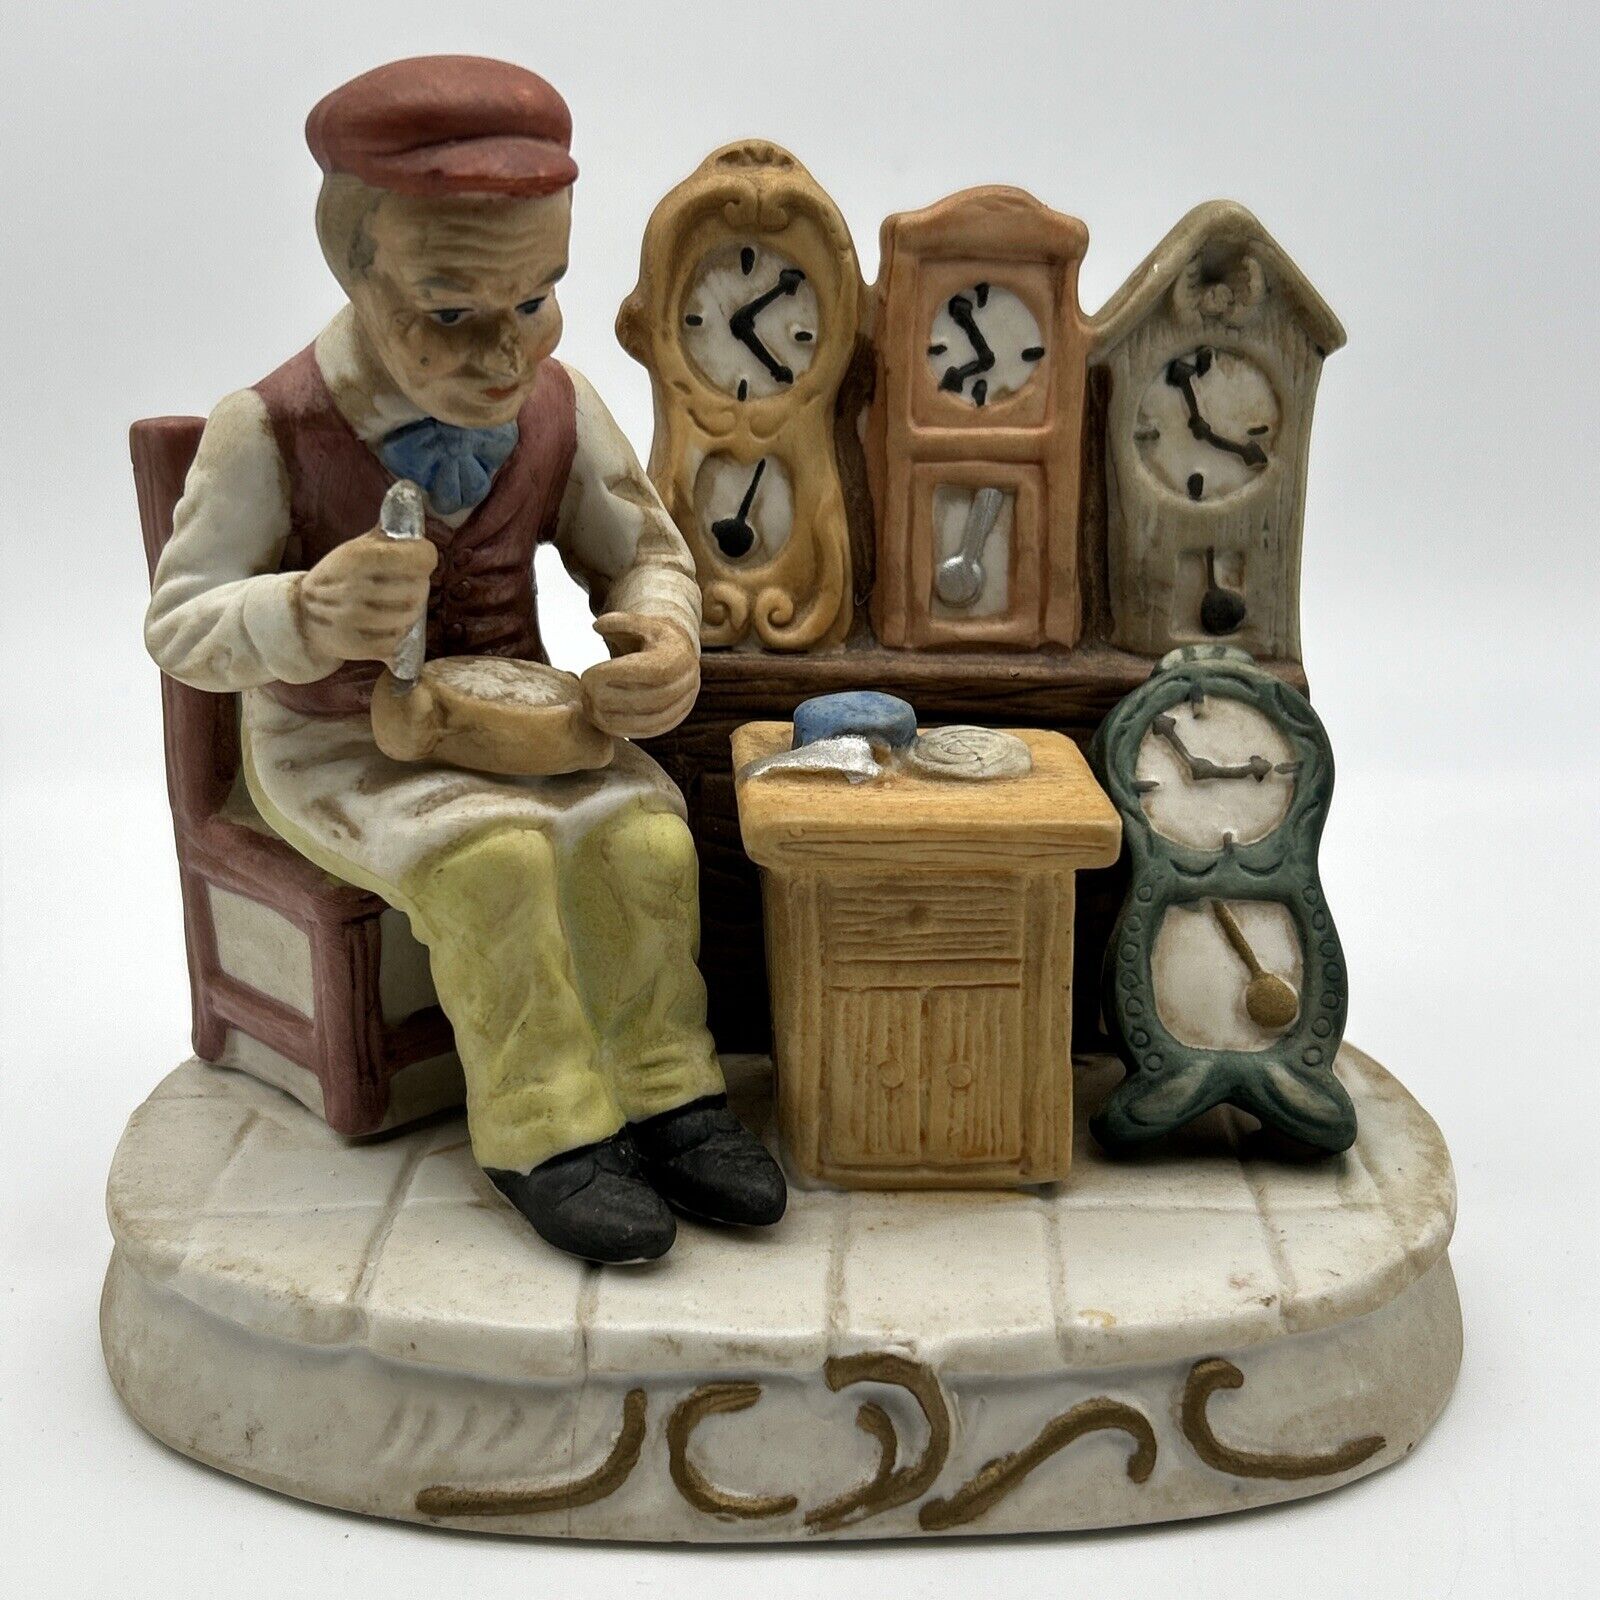 VTG Watchmaker Watch Hallmark Horologist Porcelain Charming Hand Painted Figure